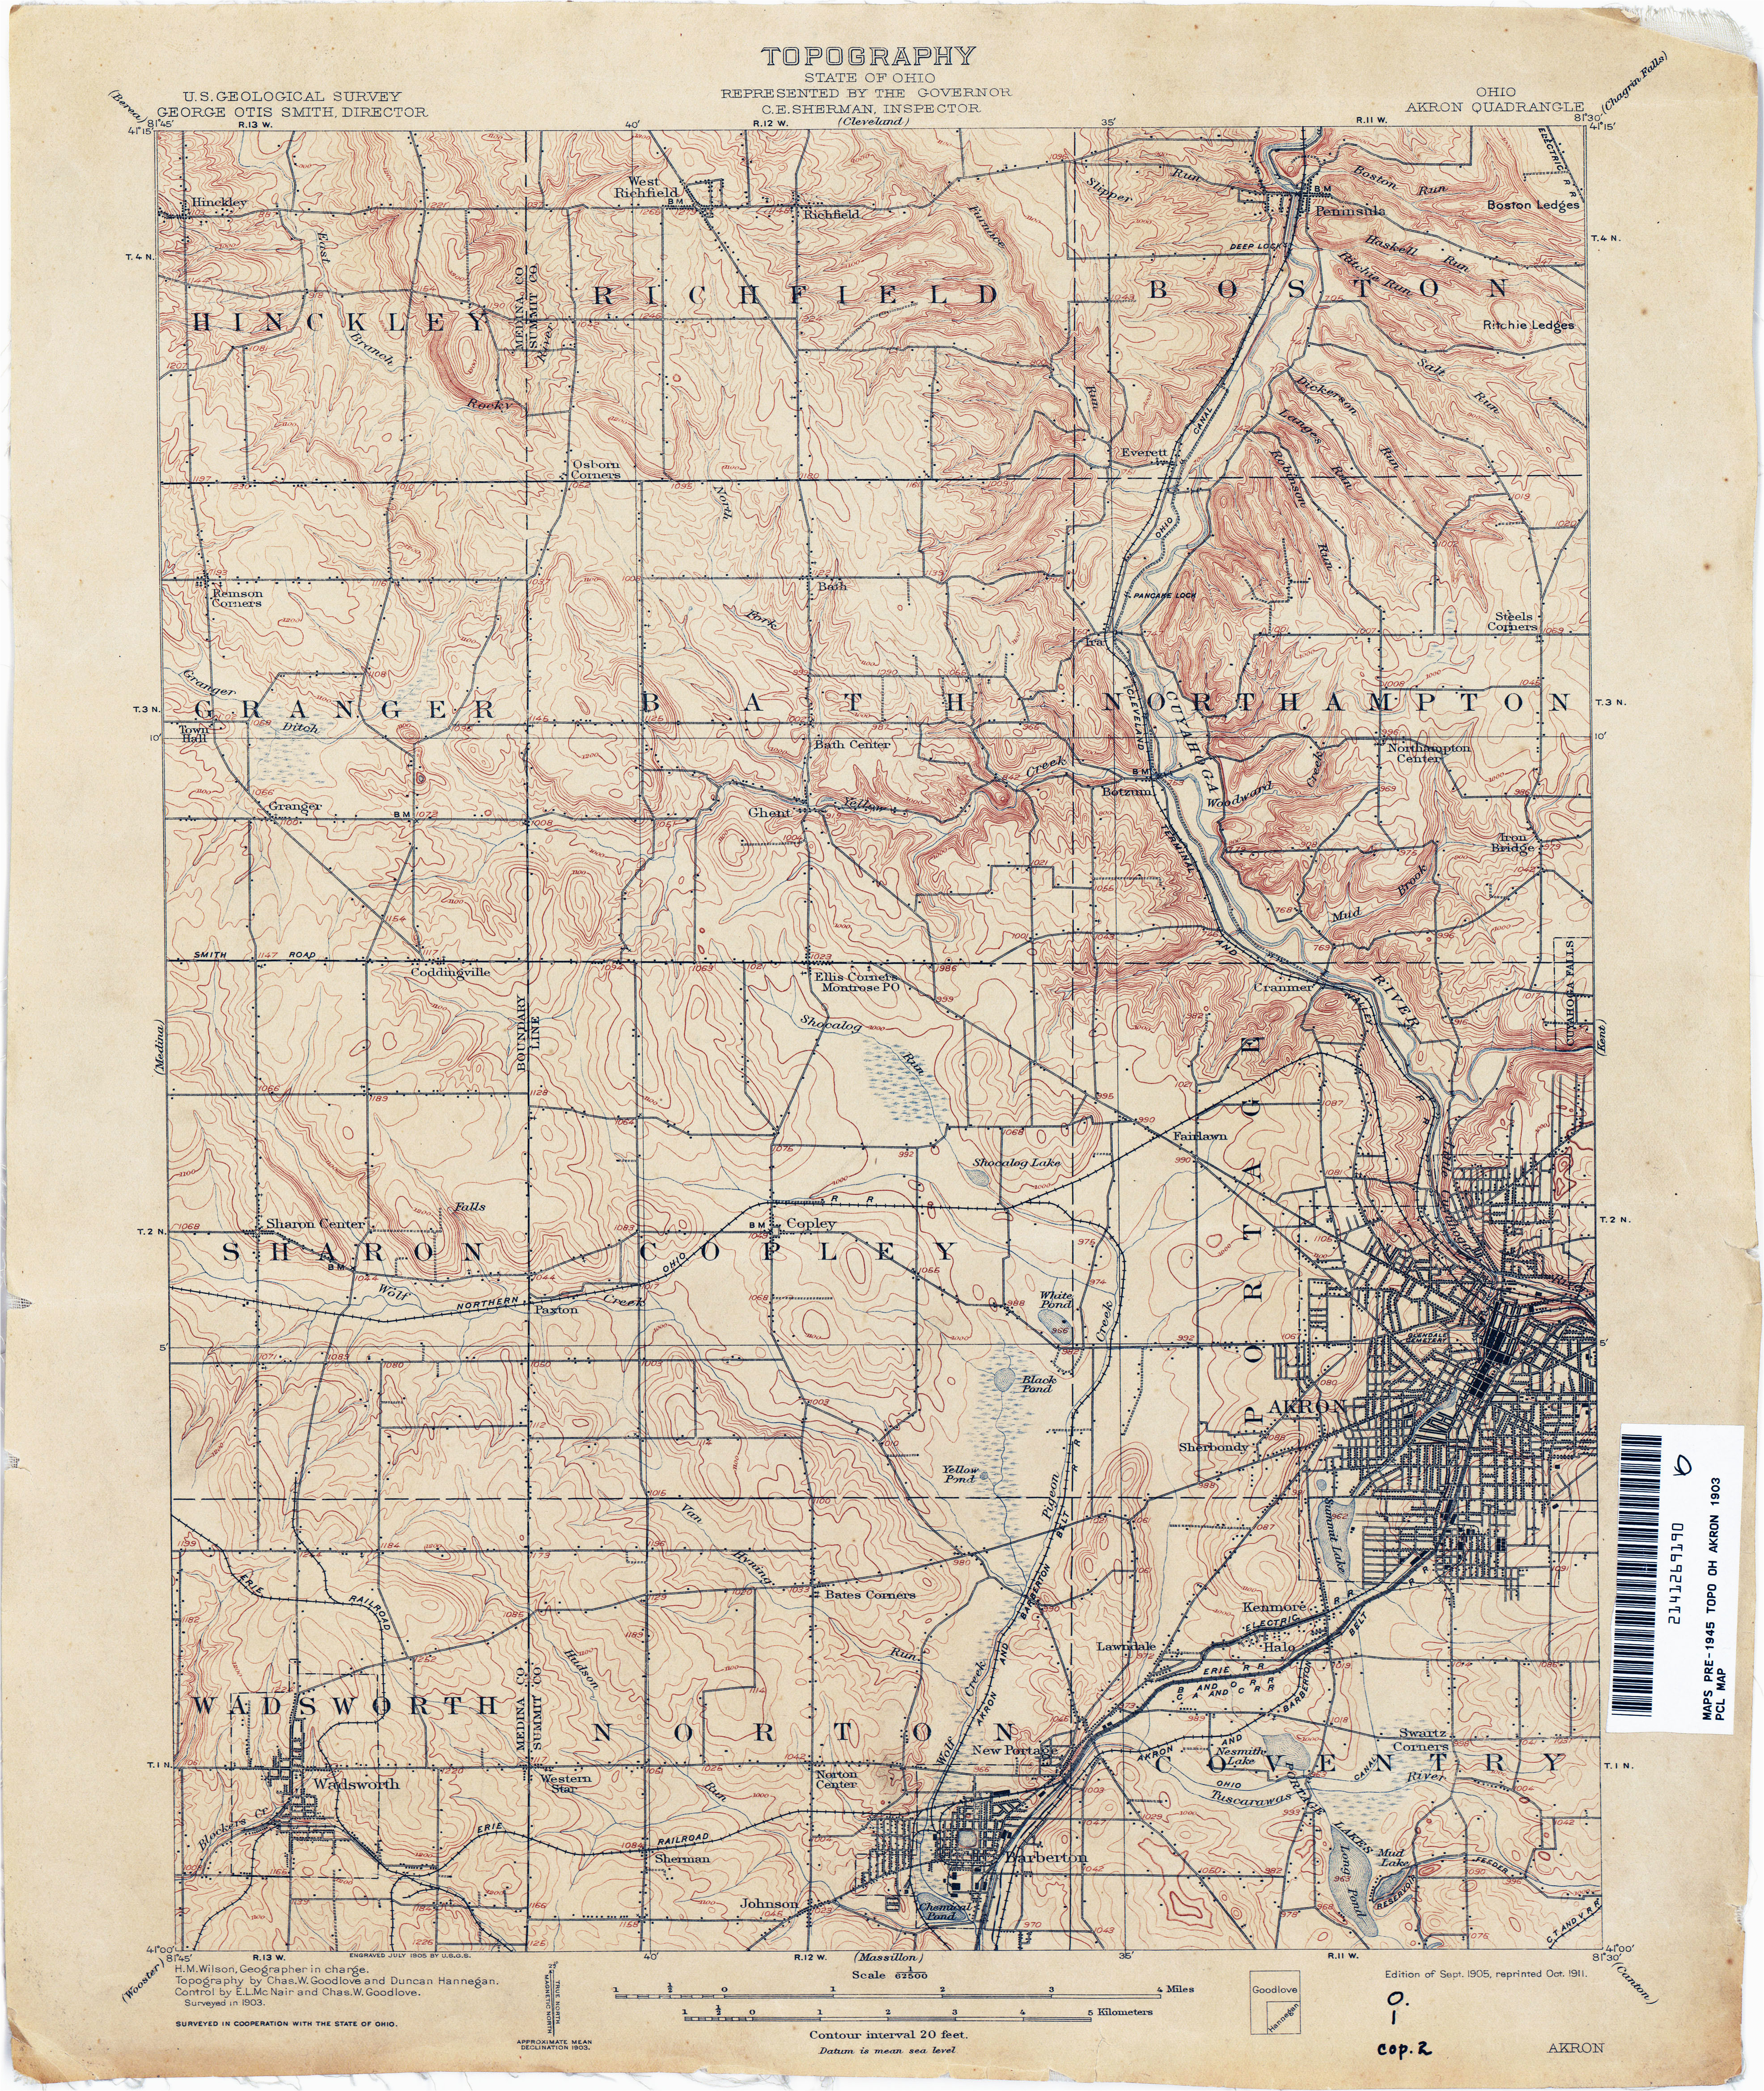 Lisbon Ohio Map Ohio Historical topographic Maps Perry Castaa Eda Map Collection